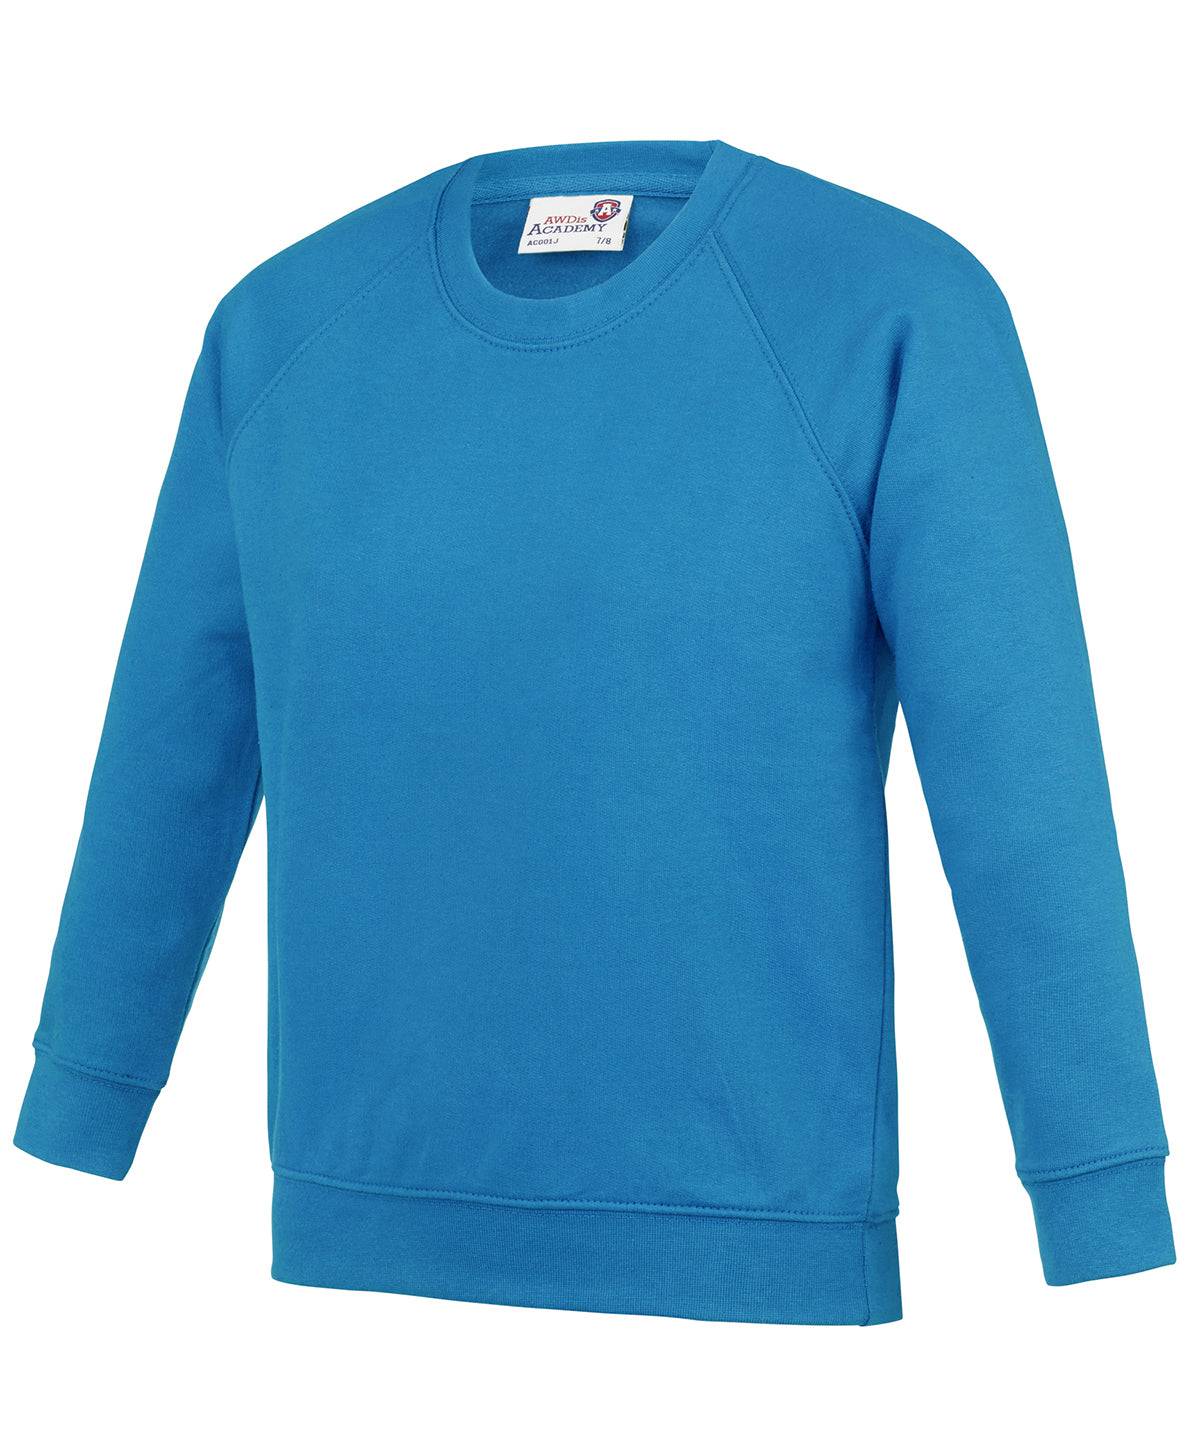 Academy Sapphire Blue - Kids Academy raglan sweatshirt